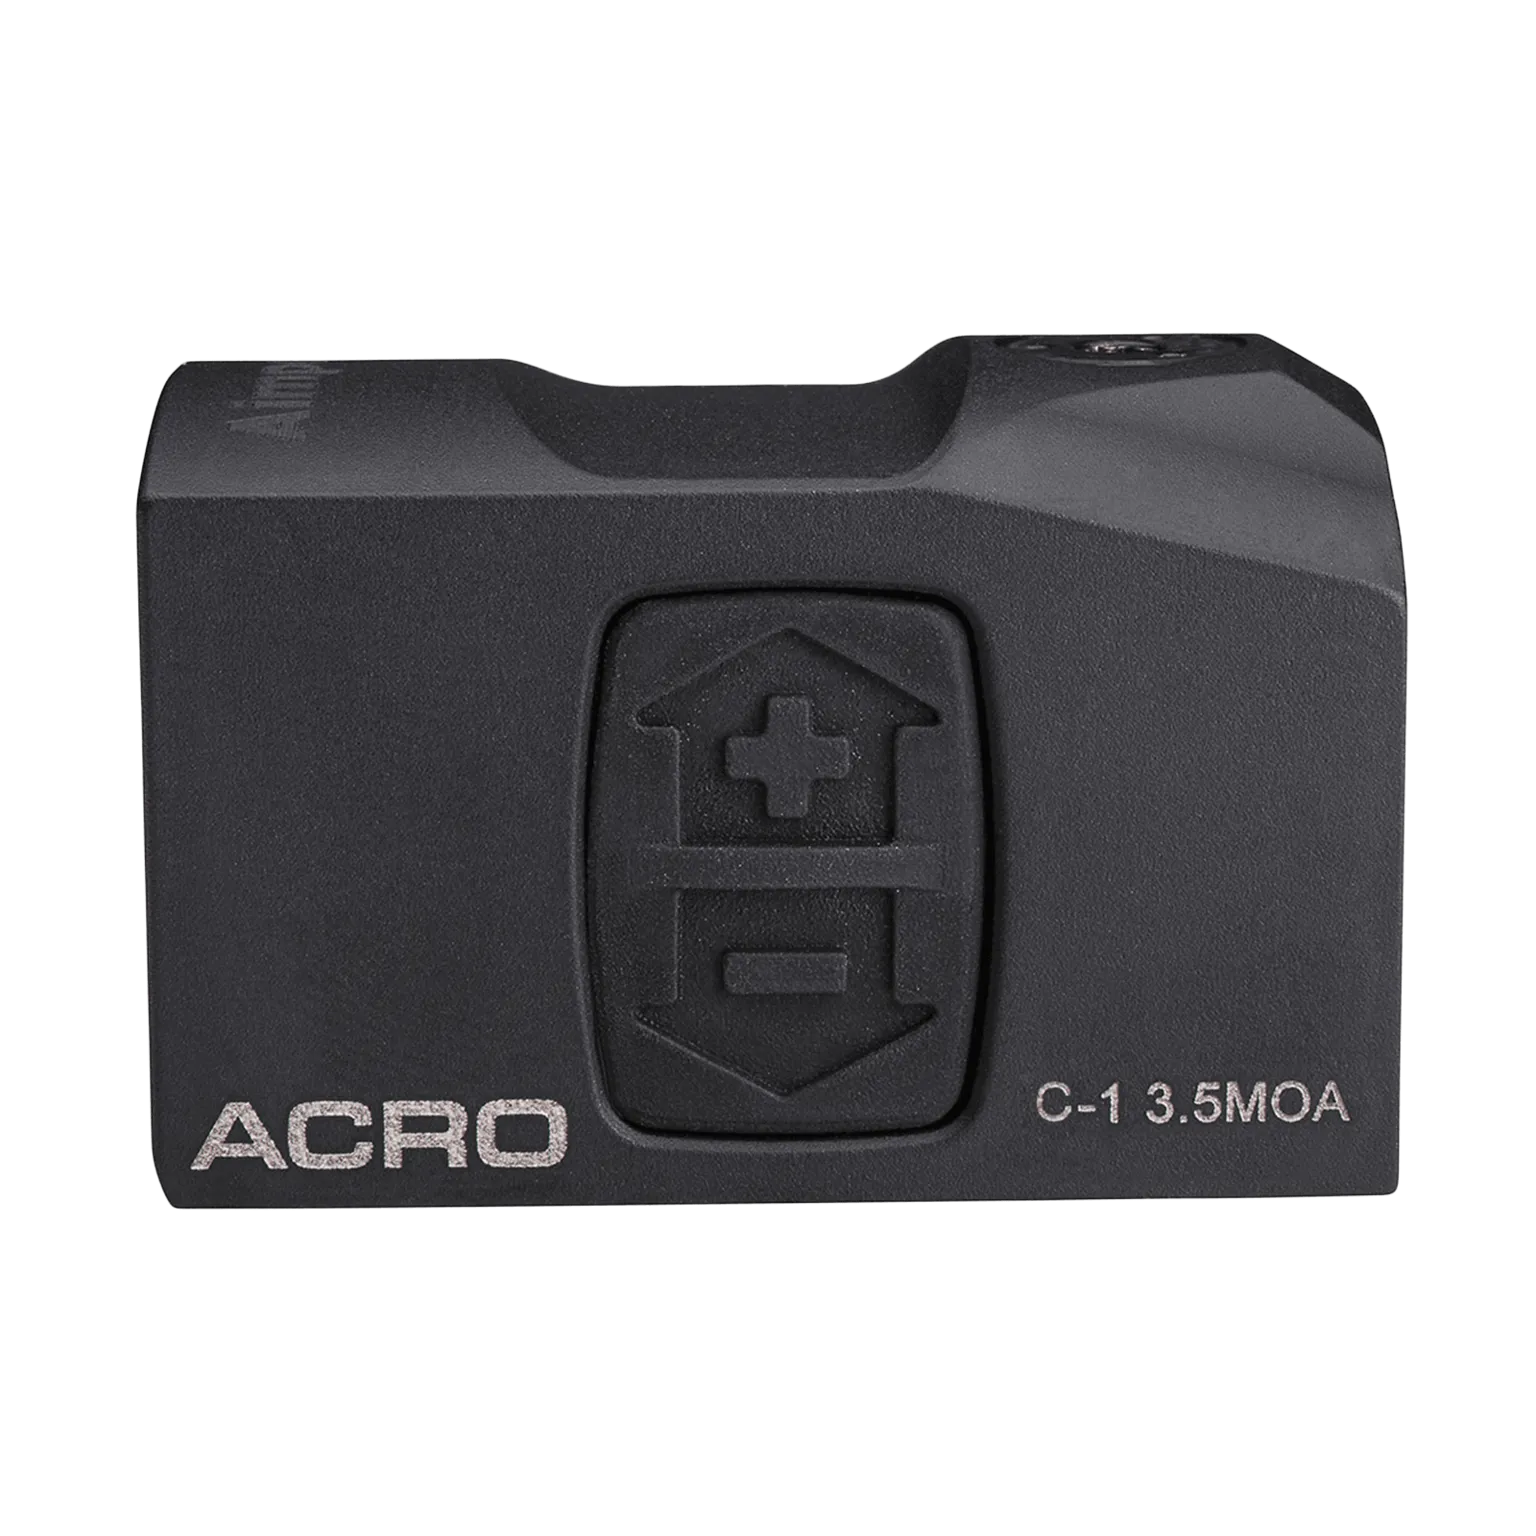 Acro C-1™ 3.5 MOA - Mirino a punto rosso con interfaccia Acro™ integrata - 2